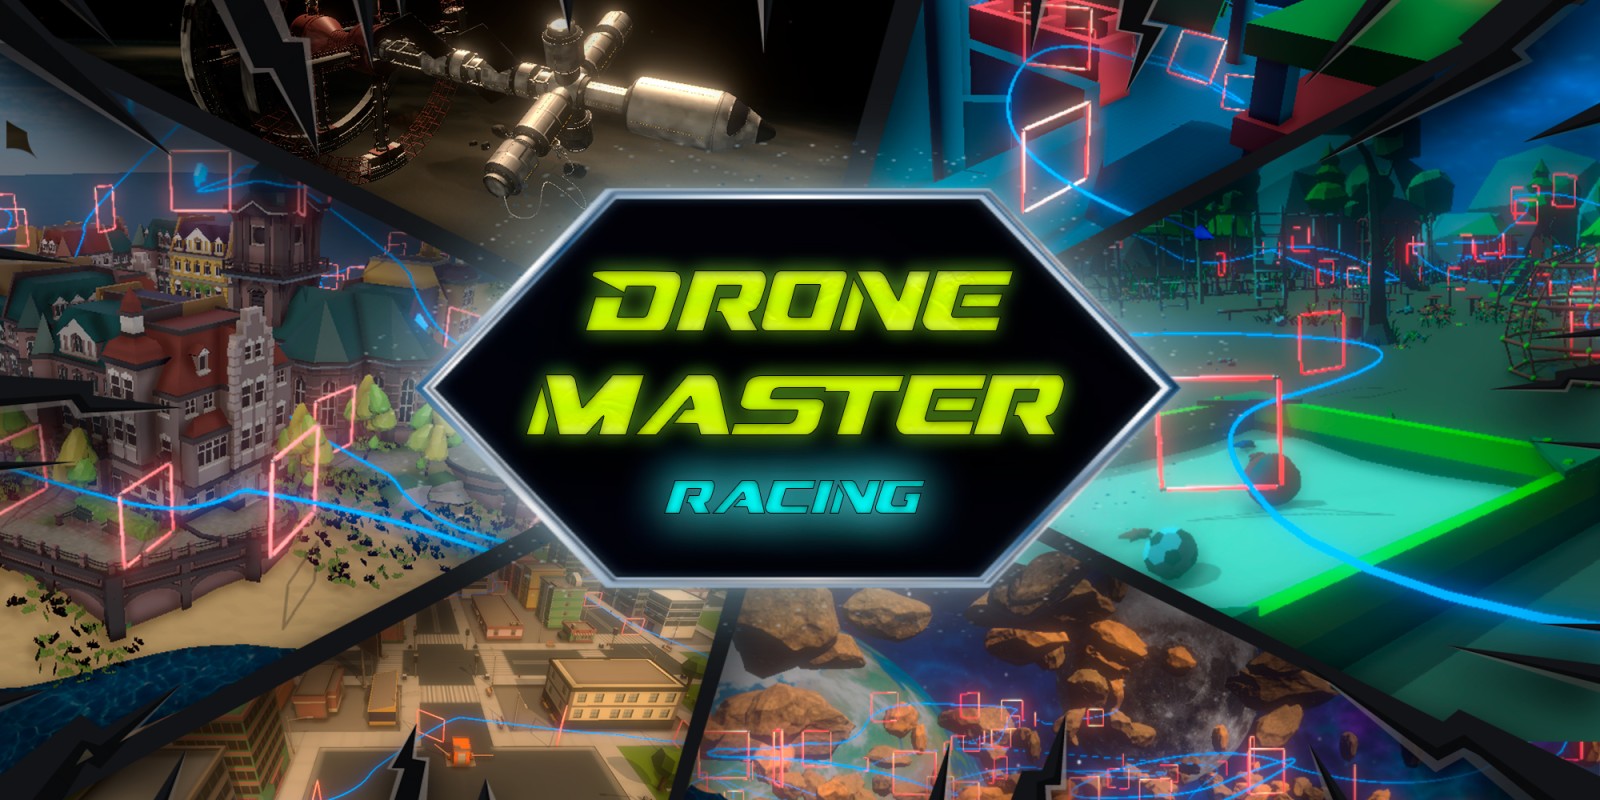 Drone Master Racing